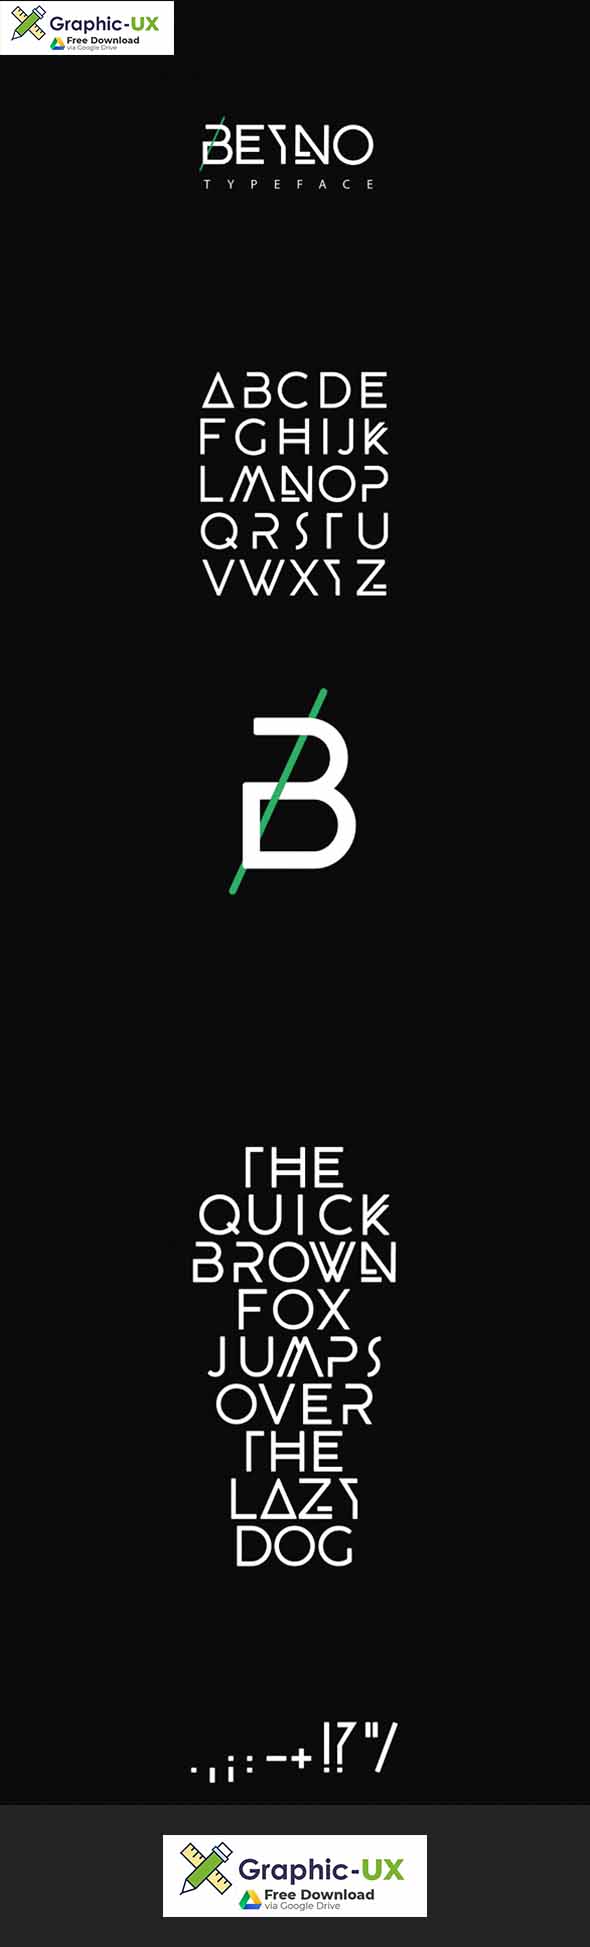 BEYNO Typeface Font